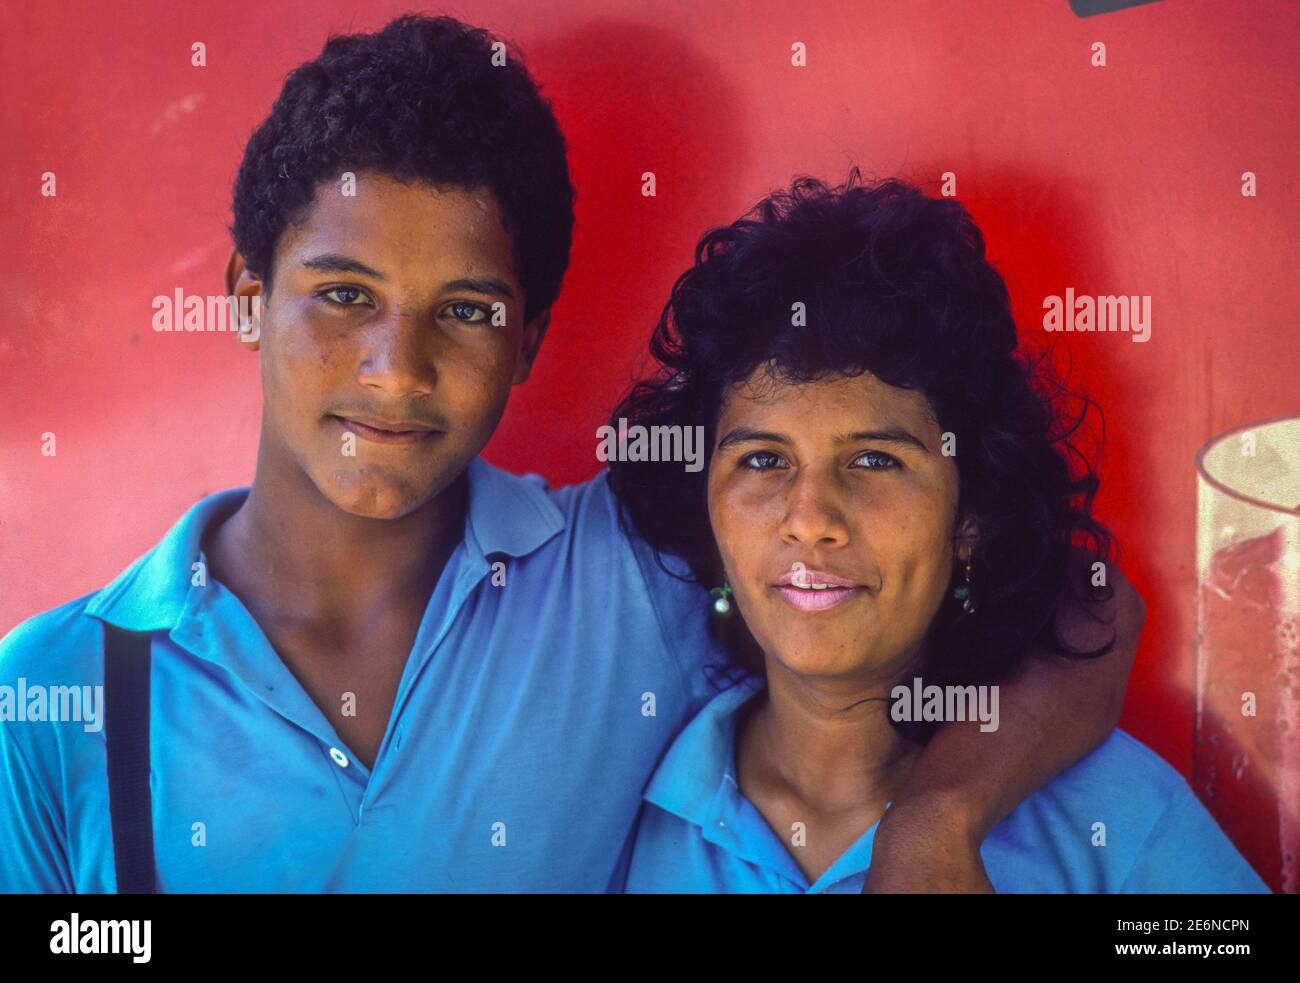 CARACAS, VENEZUELA, 1988 - Portrait of man and woman. Stock Photo